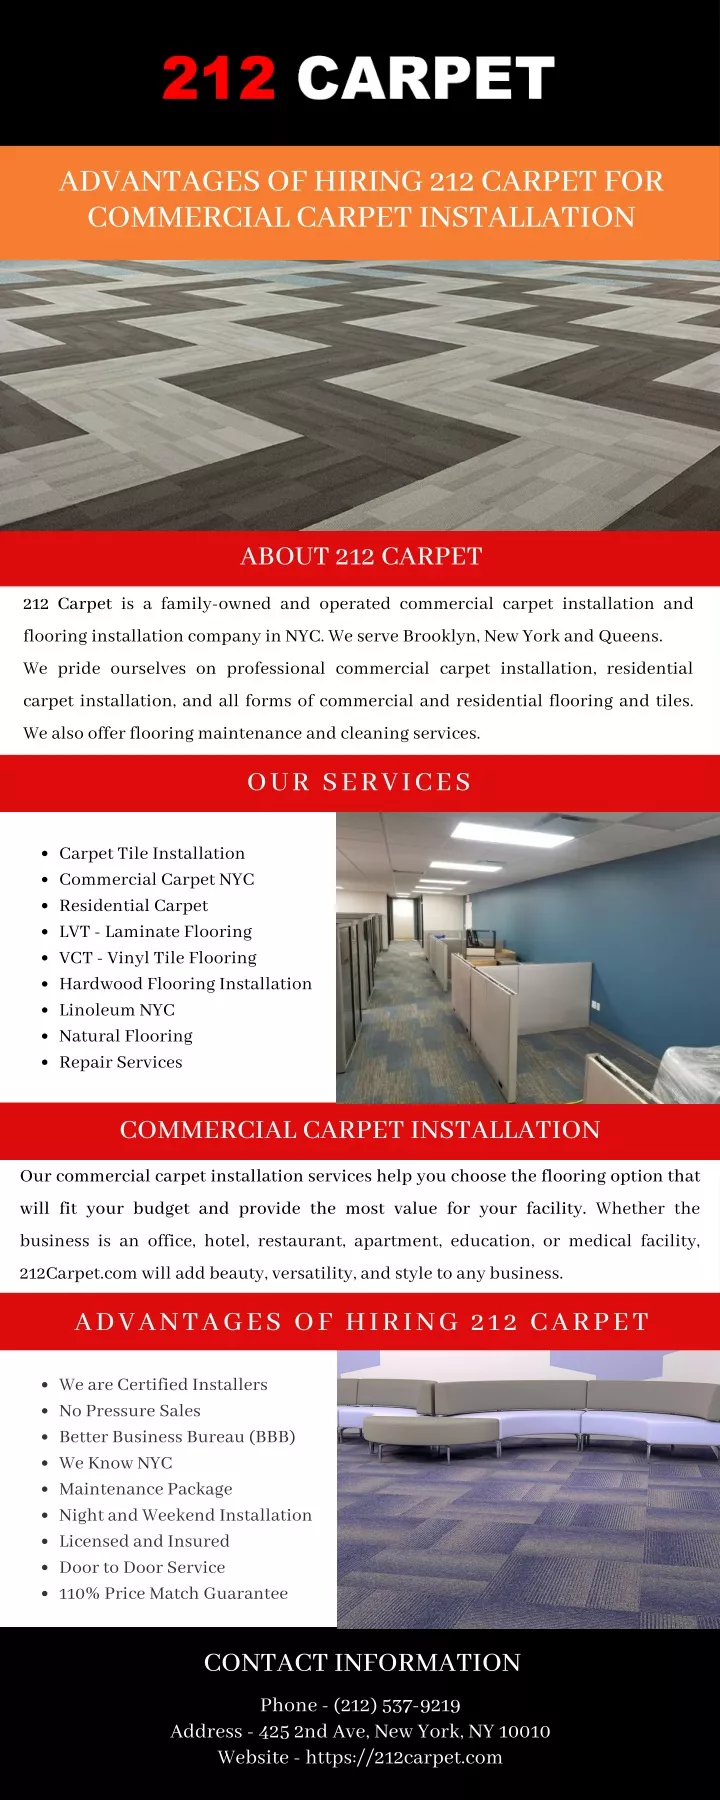 advantages of hiring 212 carpet for commercial